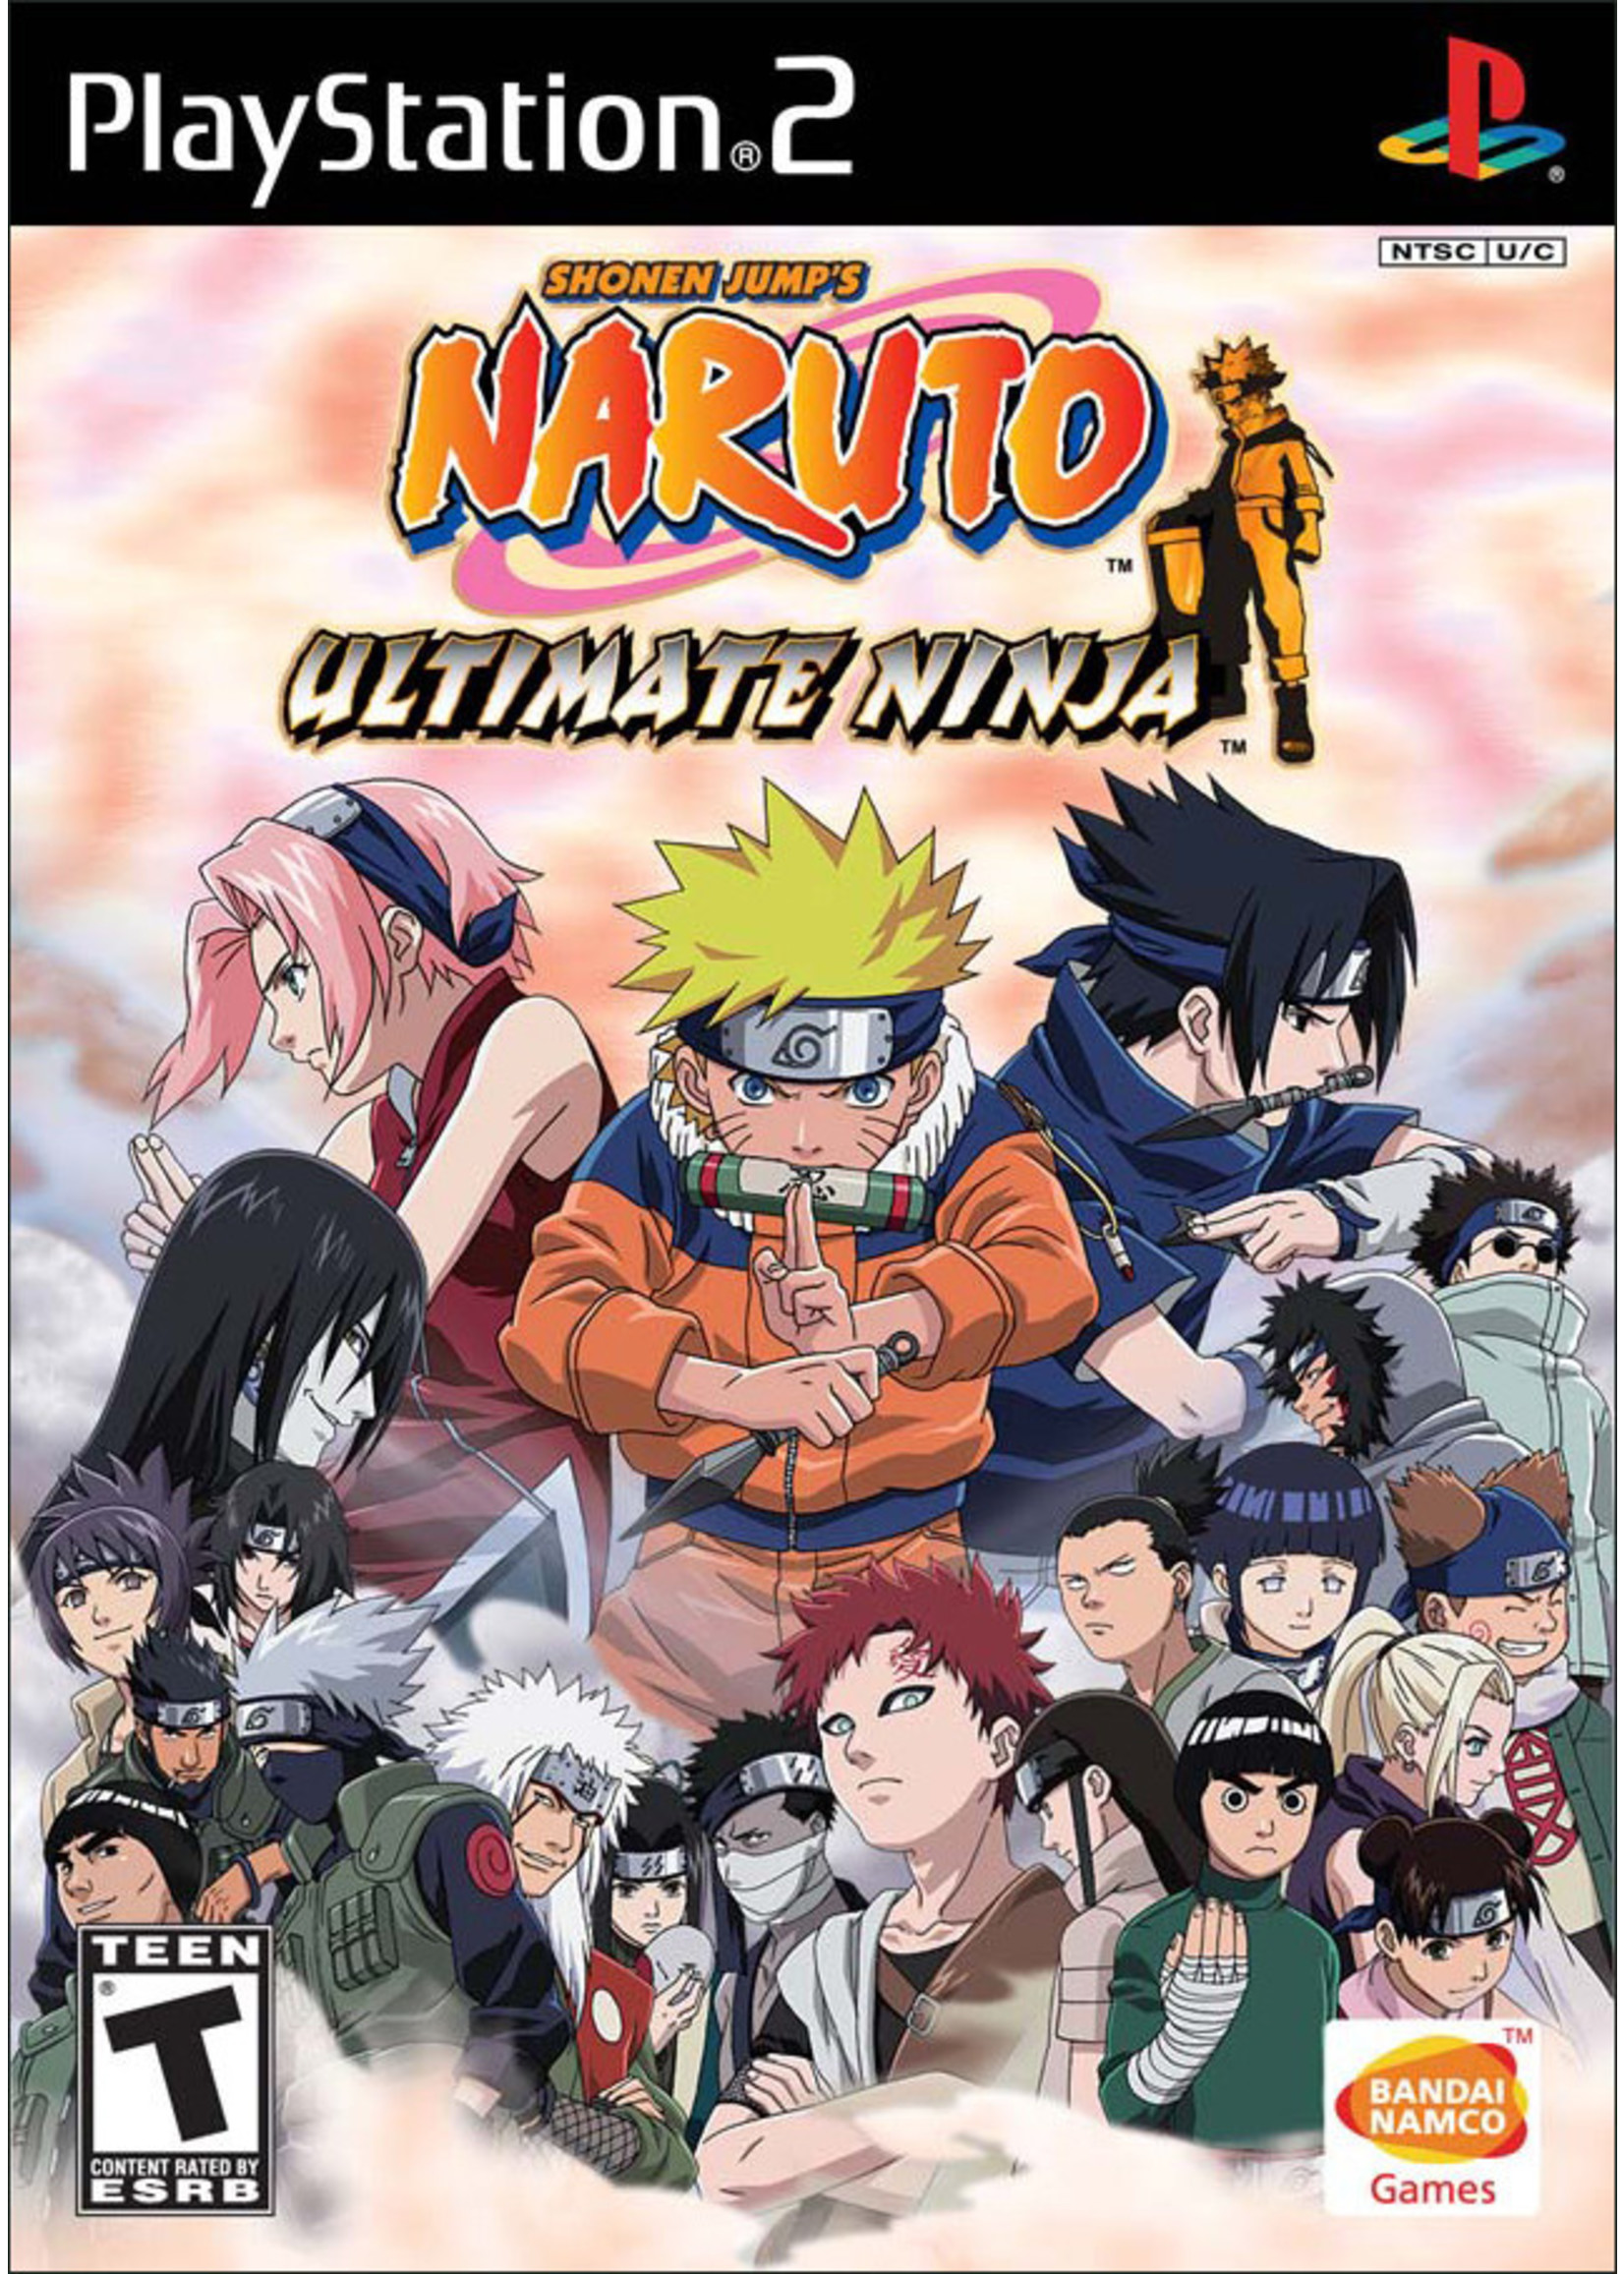 Sony Playstation 2 (PS2) Naruto Ultimate Ninja